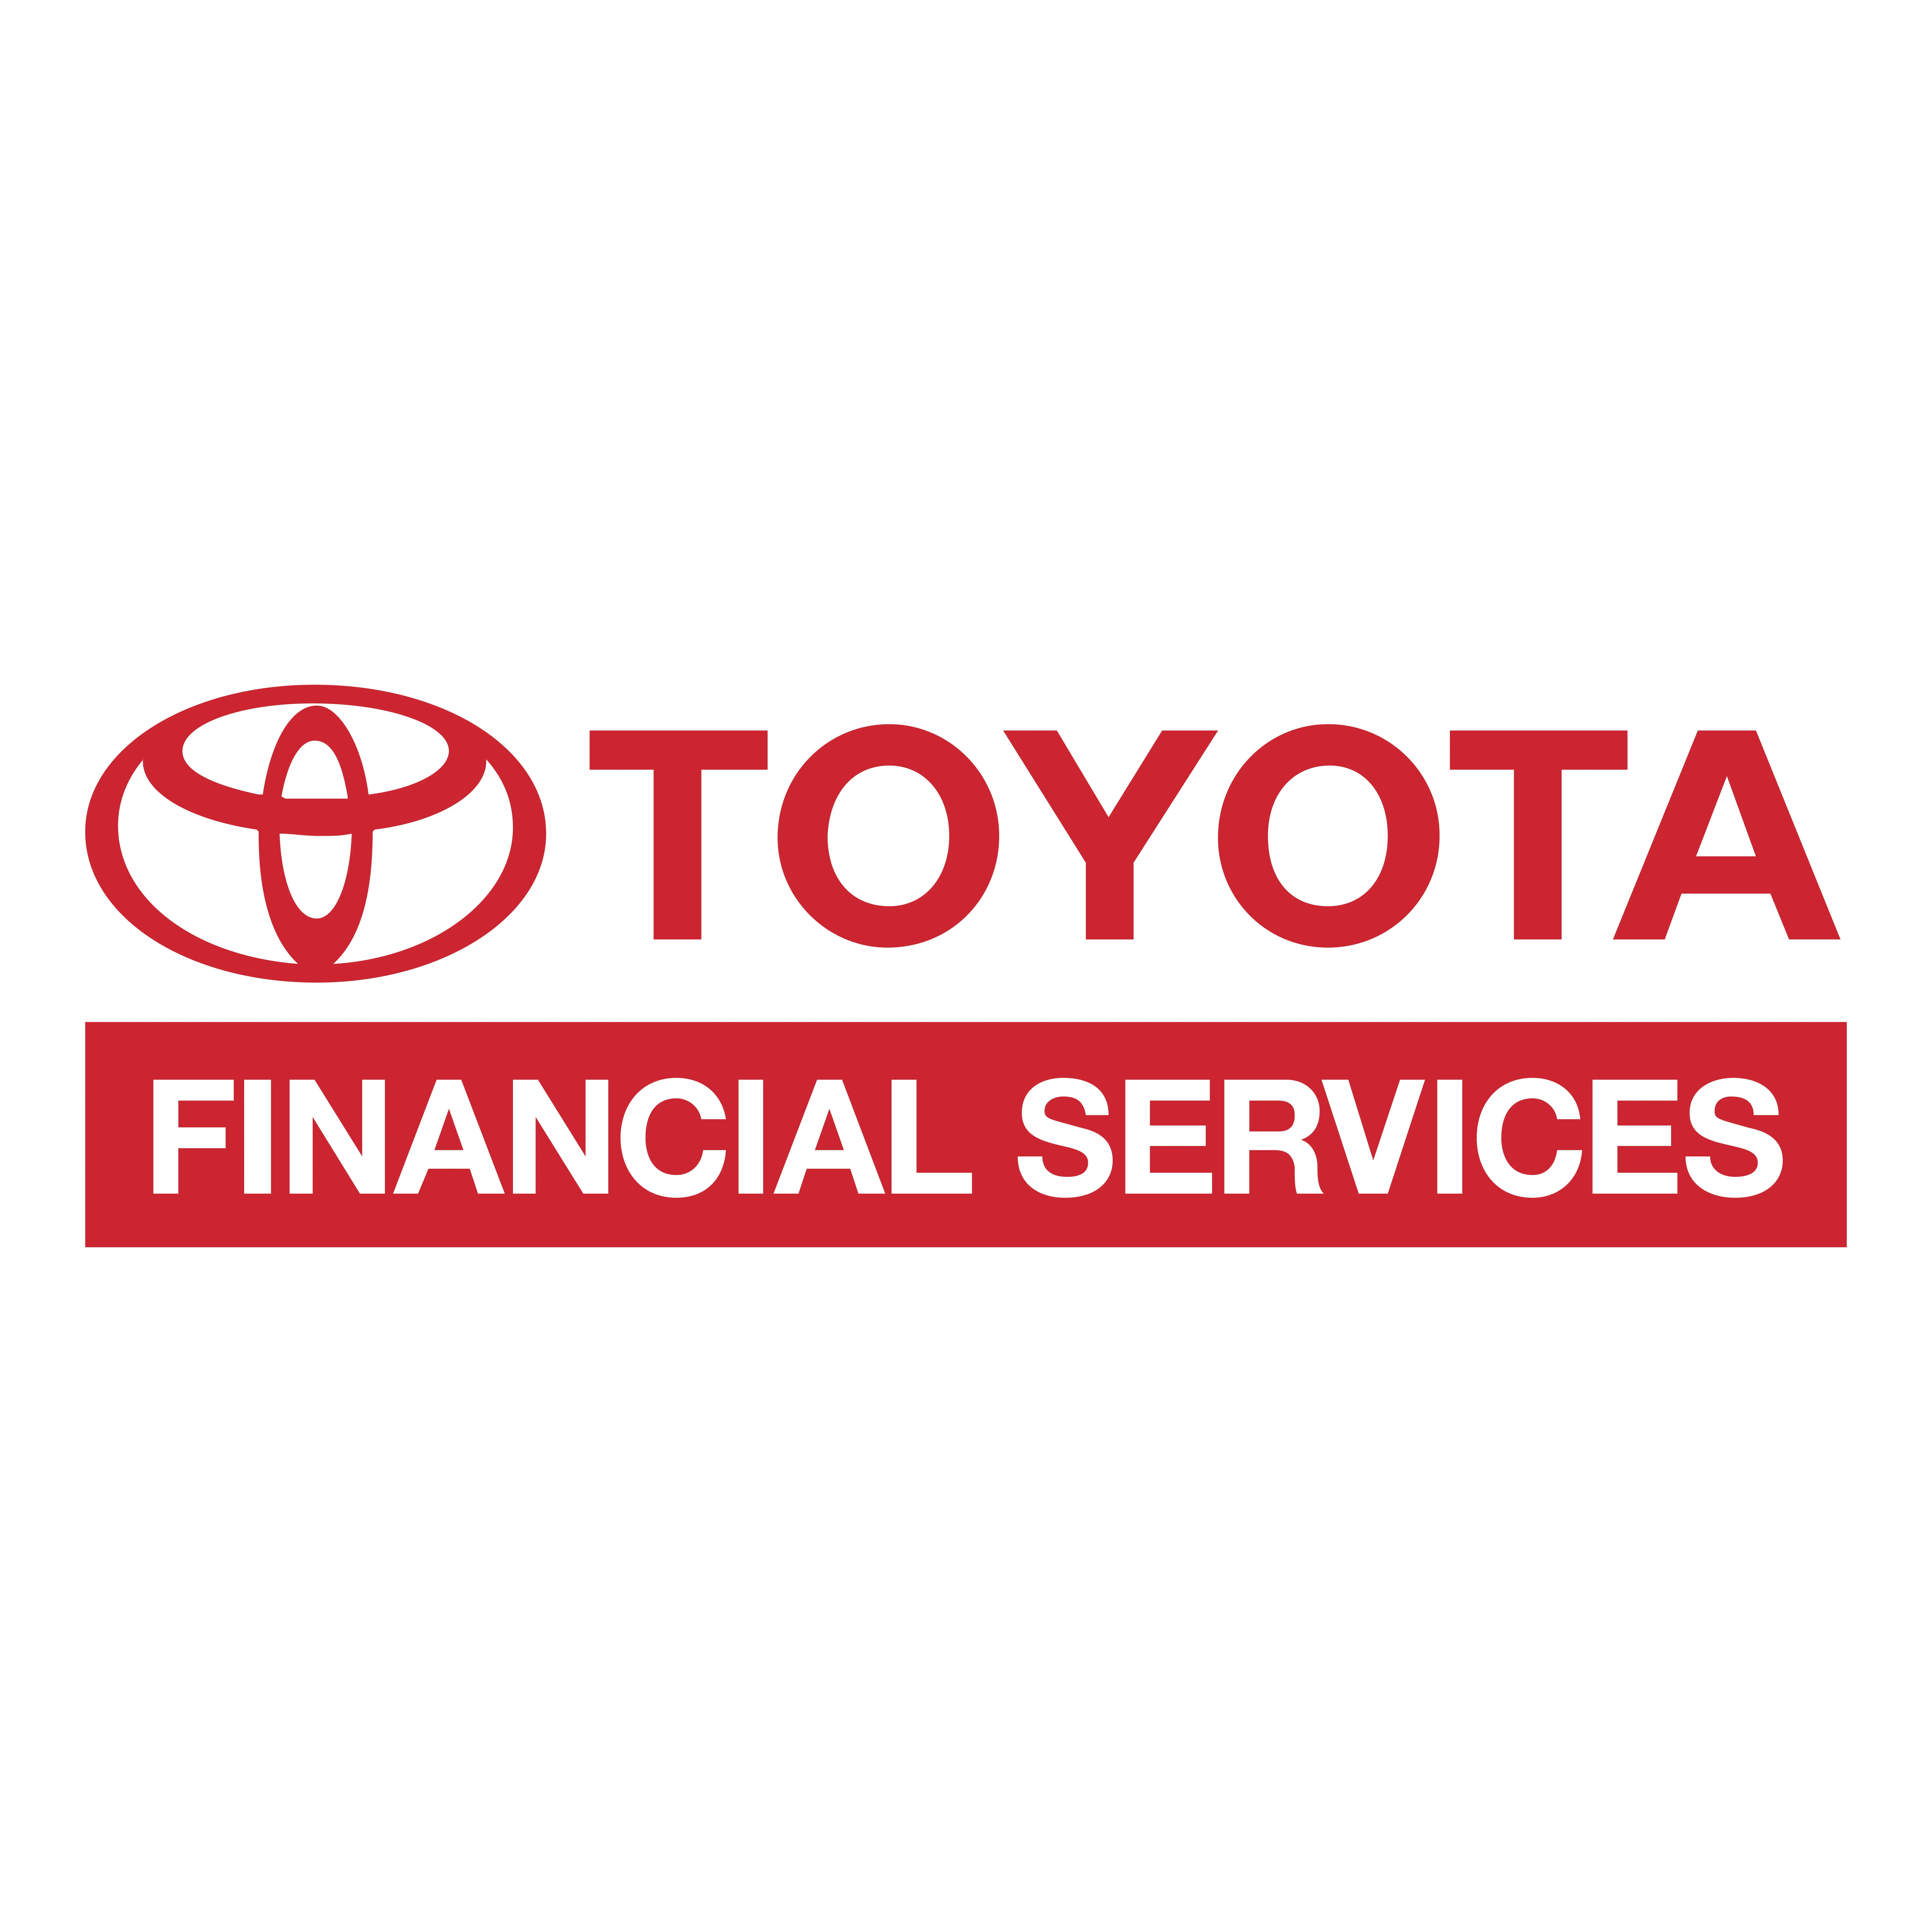 Toyota - Logo des services financiers